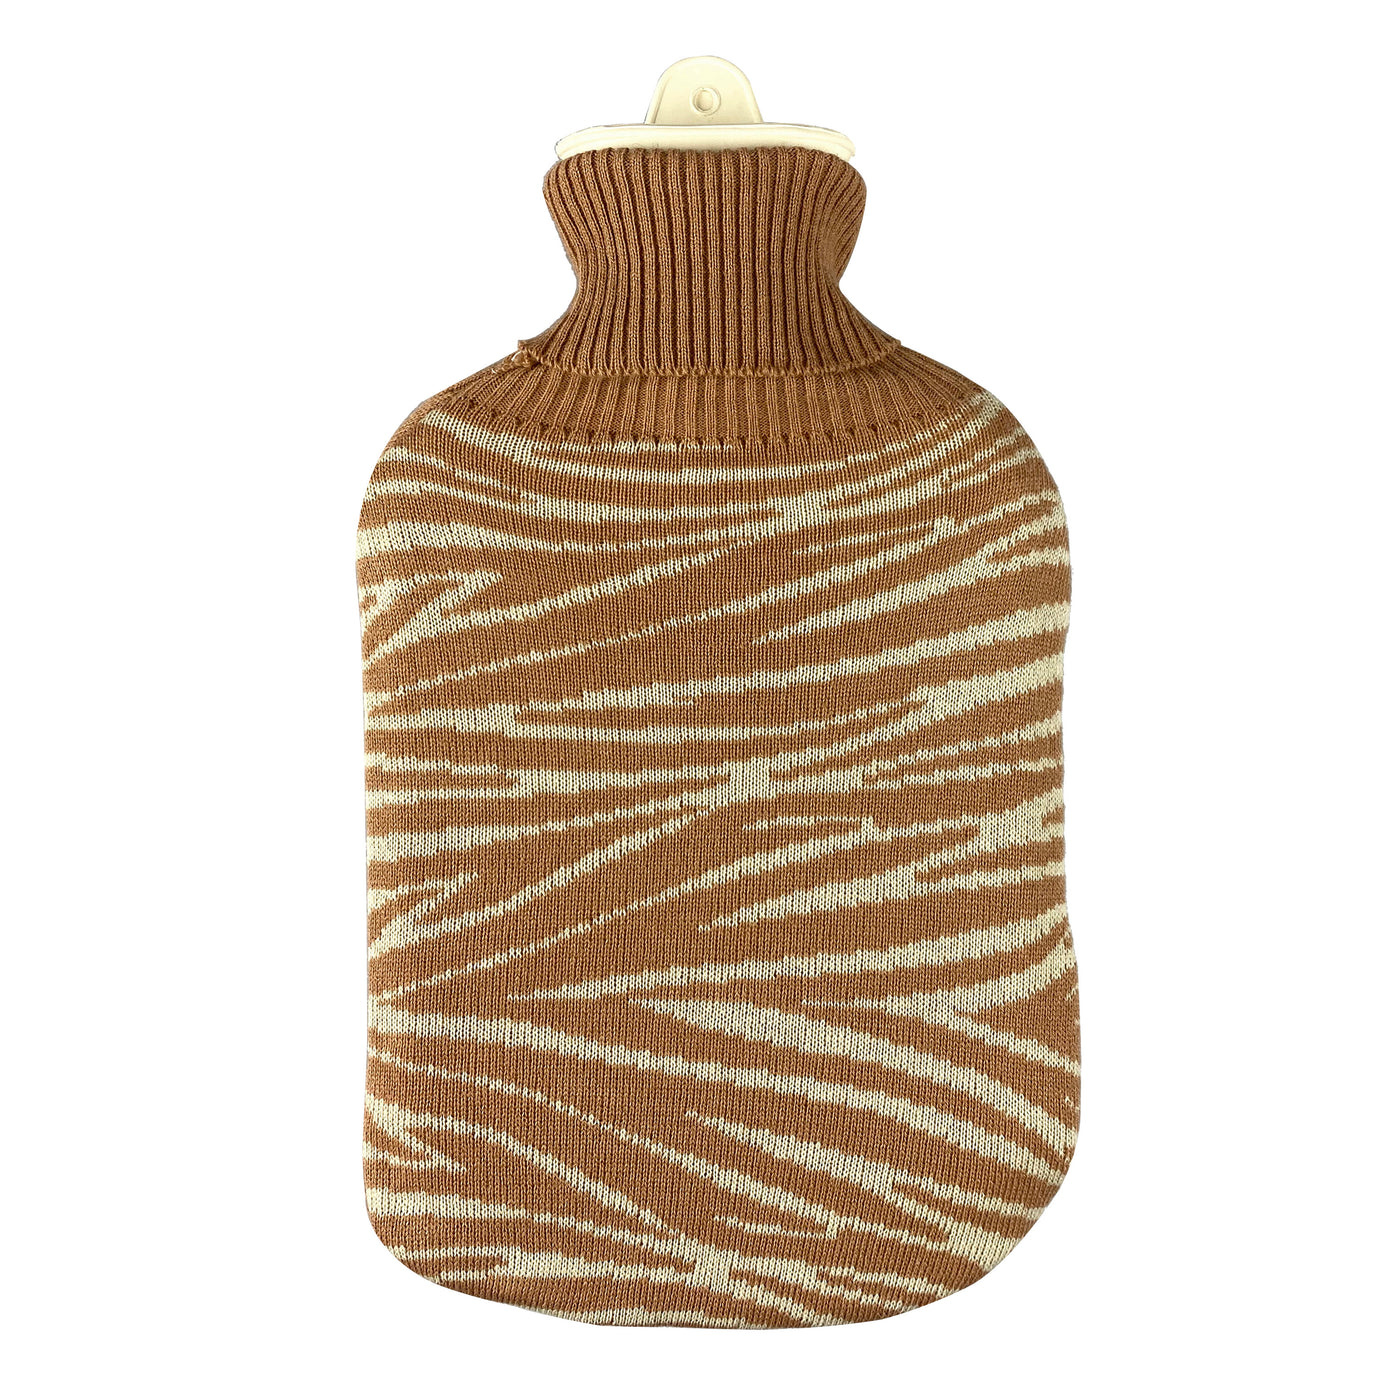 Hot Water Bottle & Cover - Zebra Knit